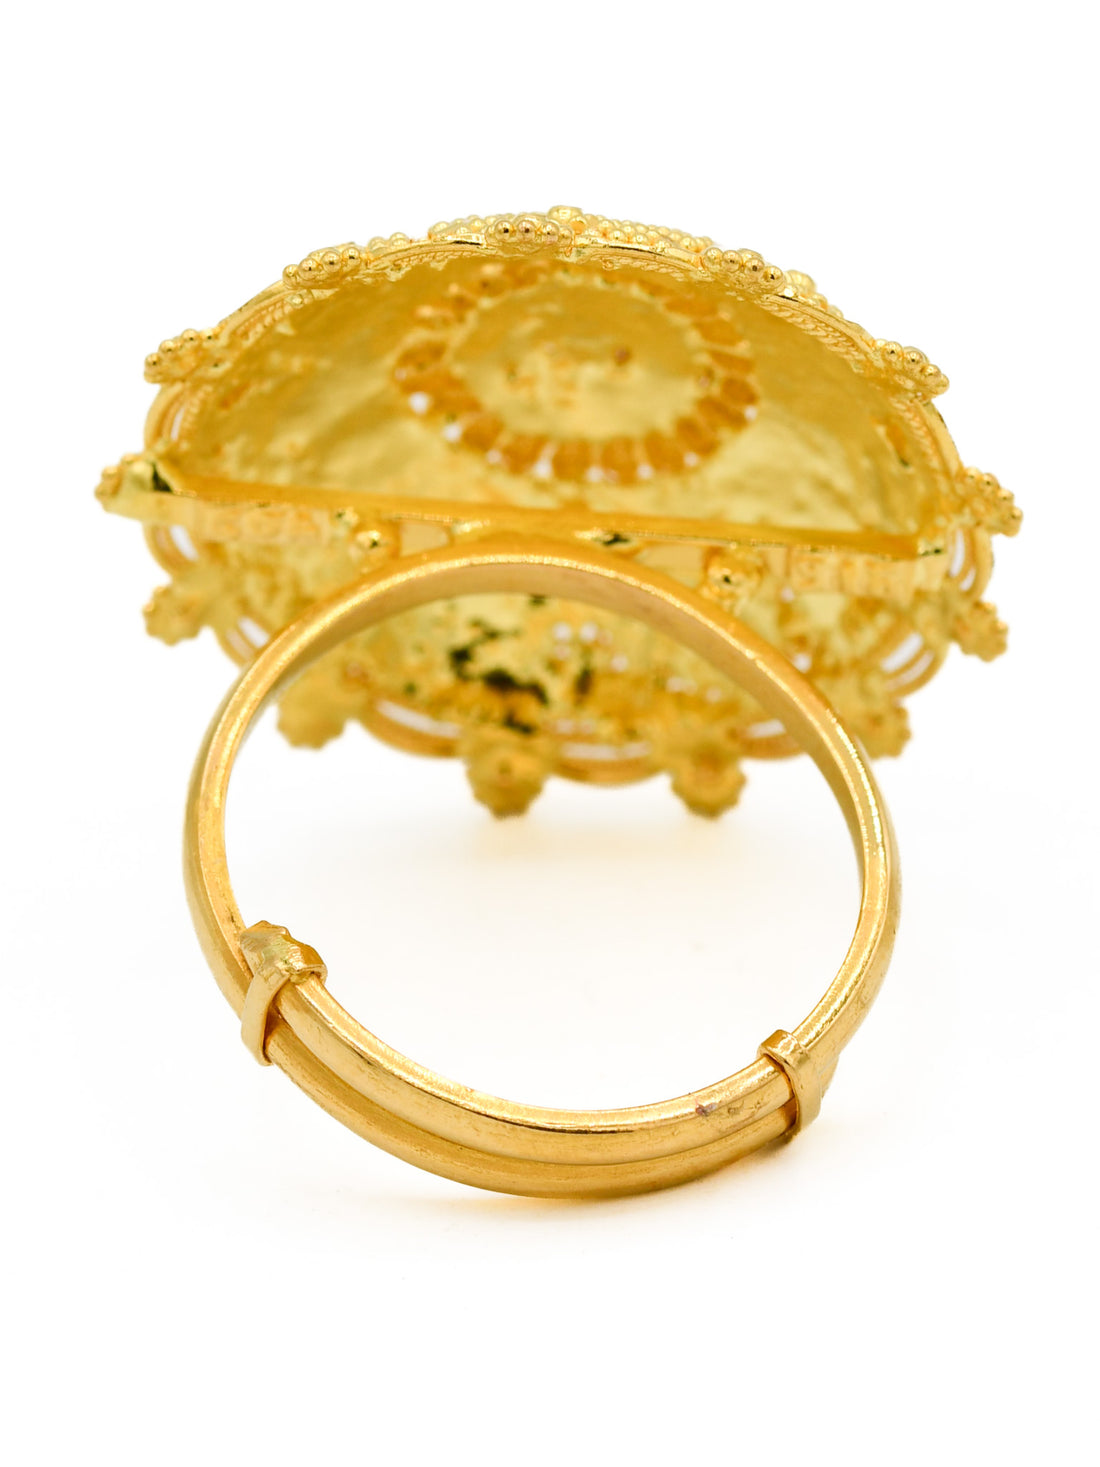 22ct Gold Filigree Round Top Adjustable Ring - Roop Darshan